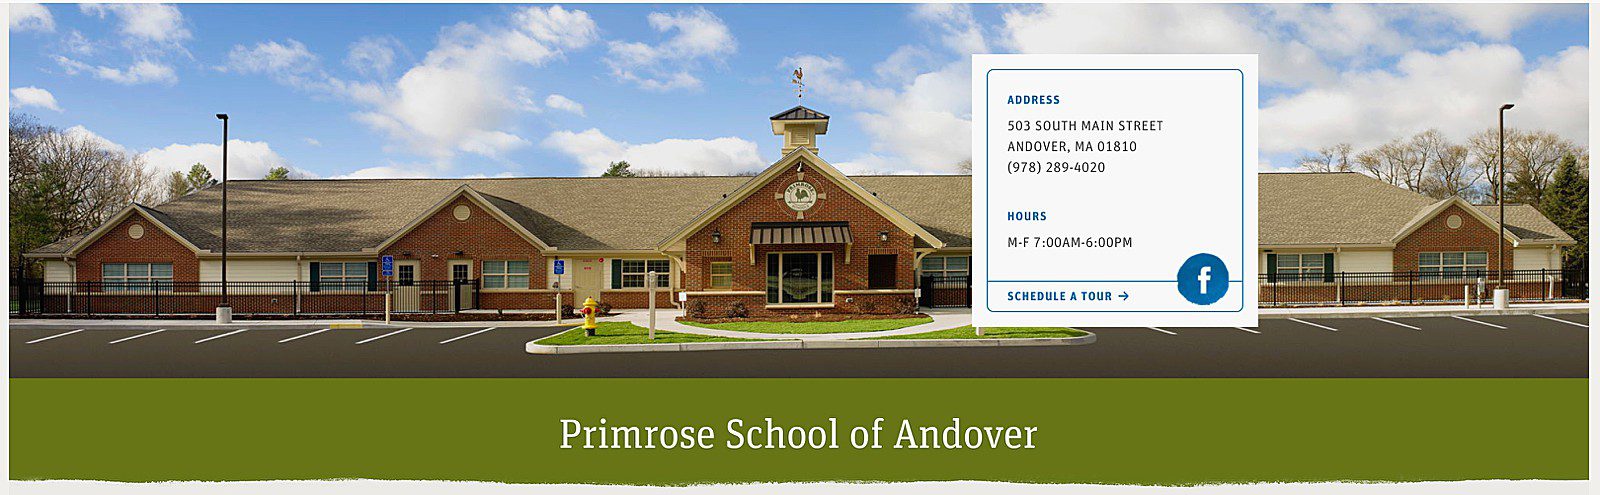 Primrose School system andover massachusetts